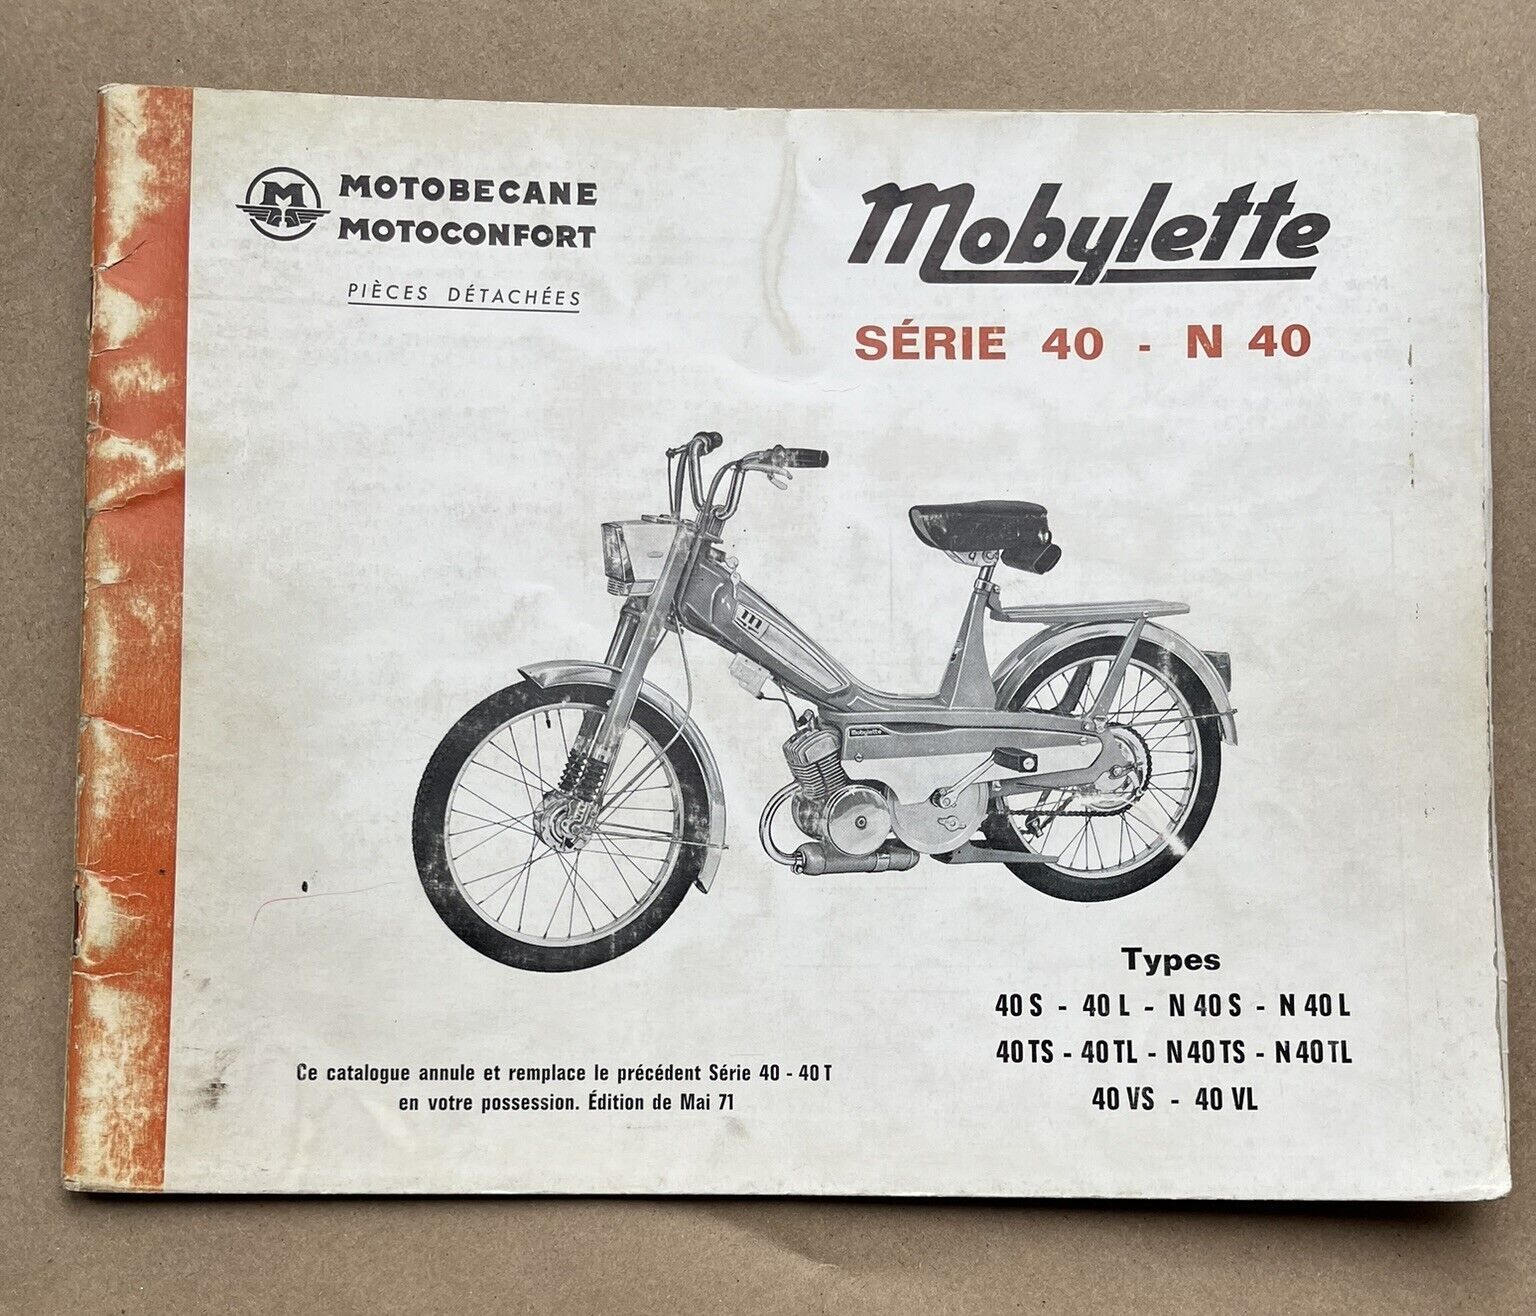 Motobecane Motoconfort Mobylette Type 40 T S L TS TL VS VL Spare Part Catalog